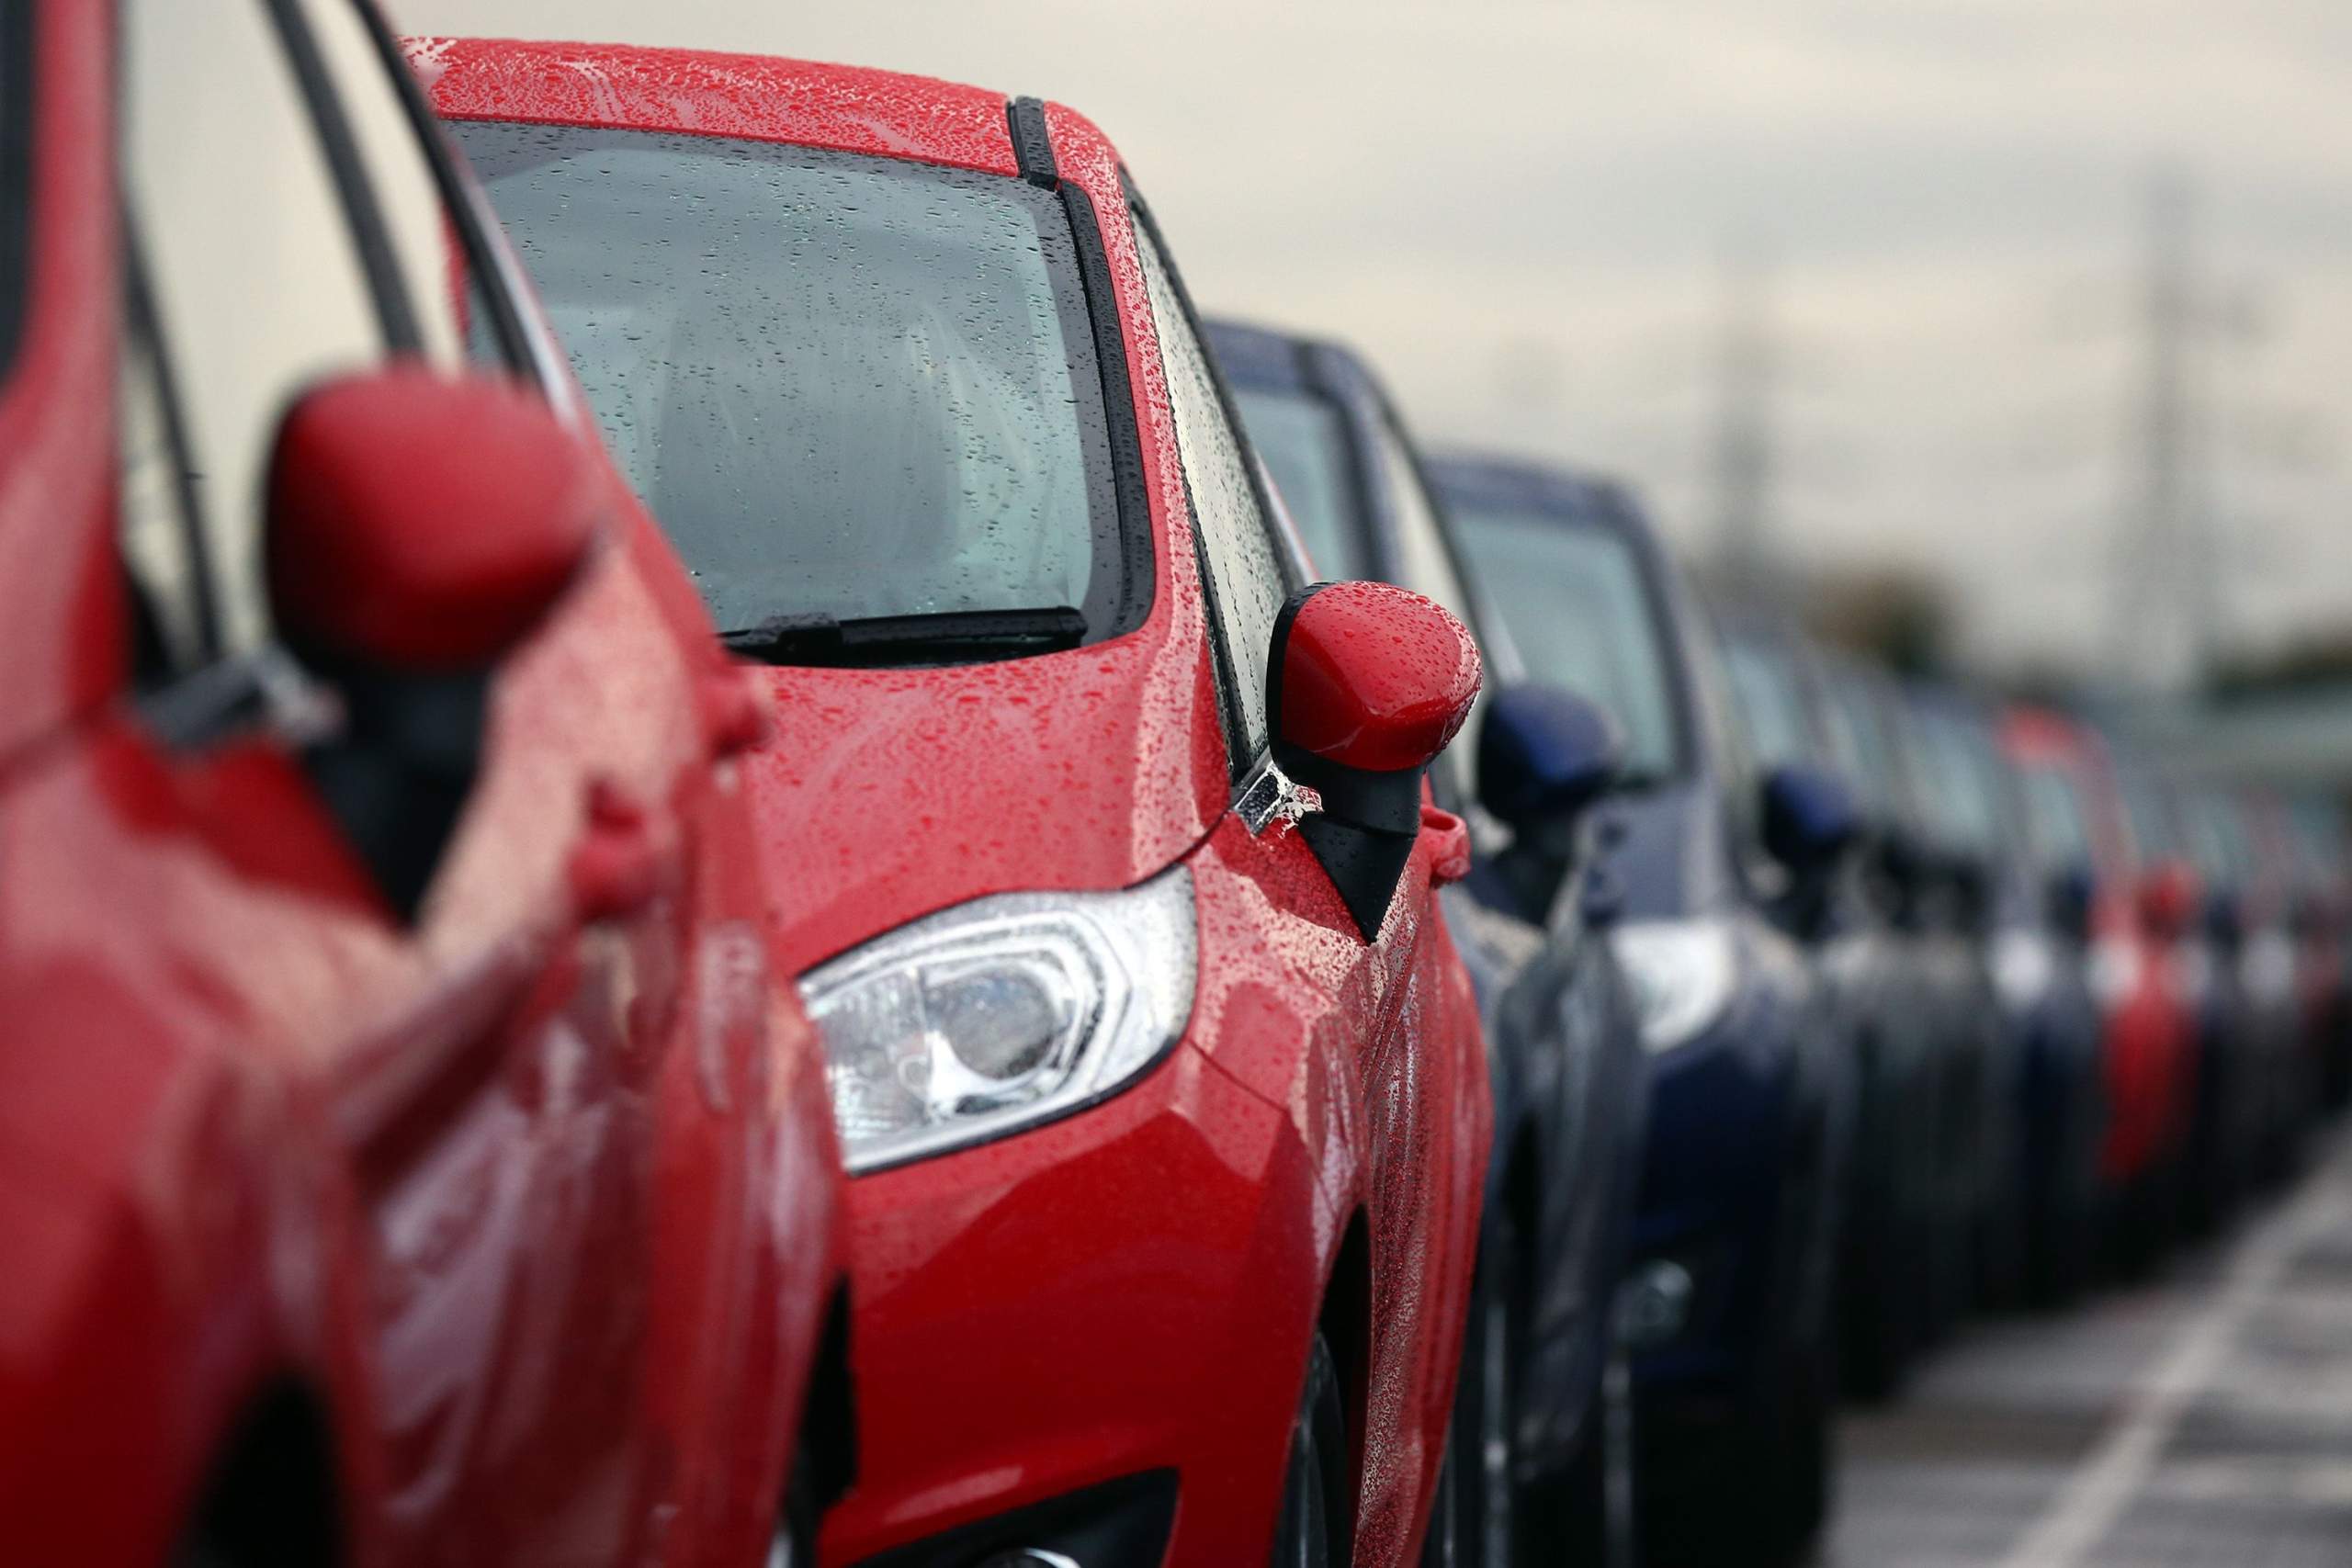 Vehicle sales mark their best July in 5 years